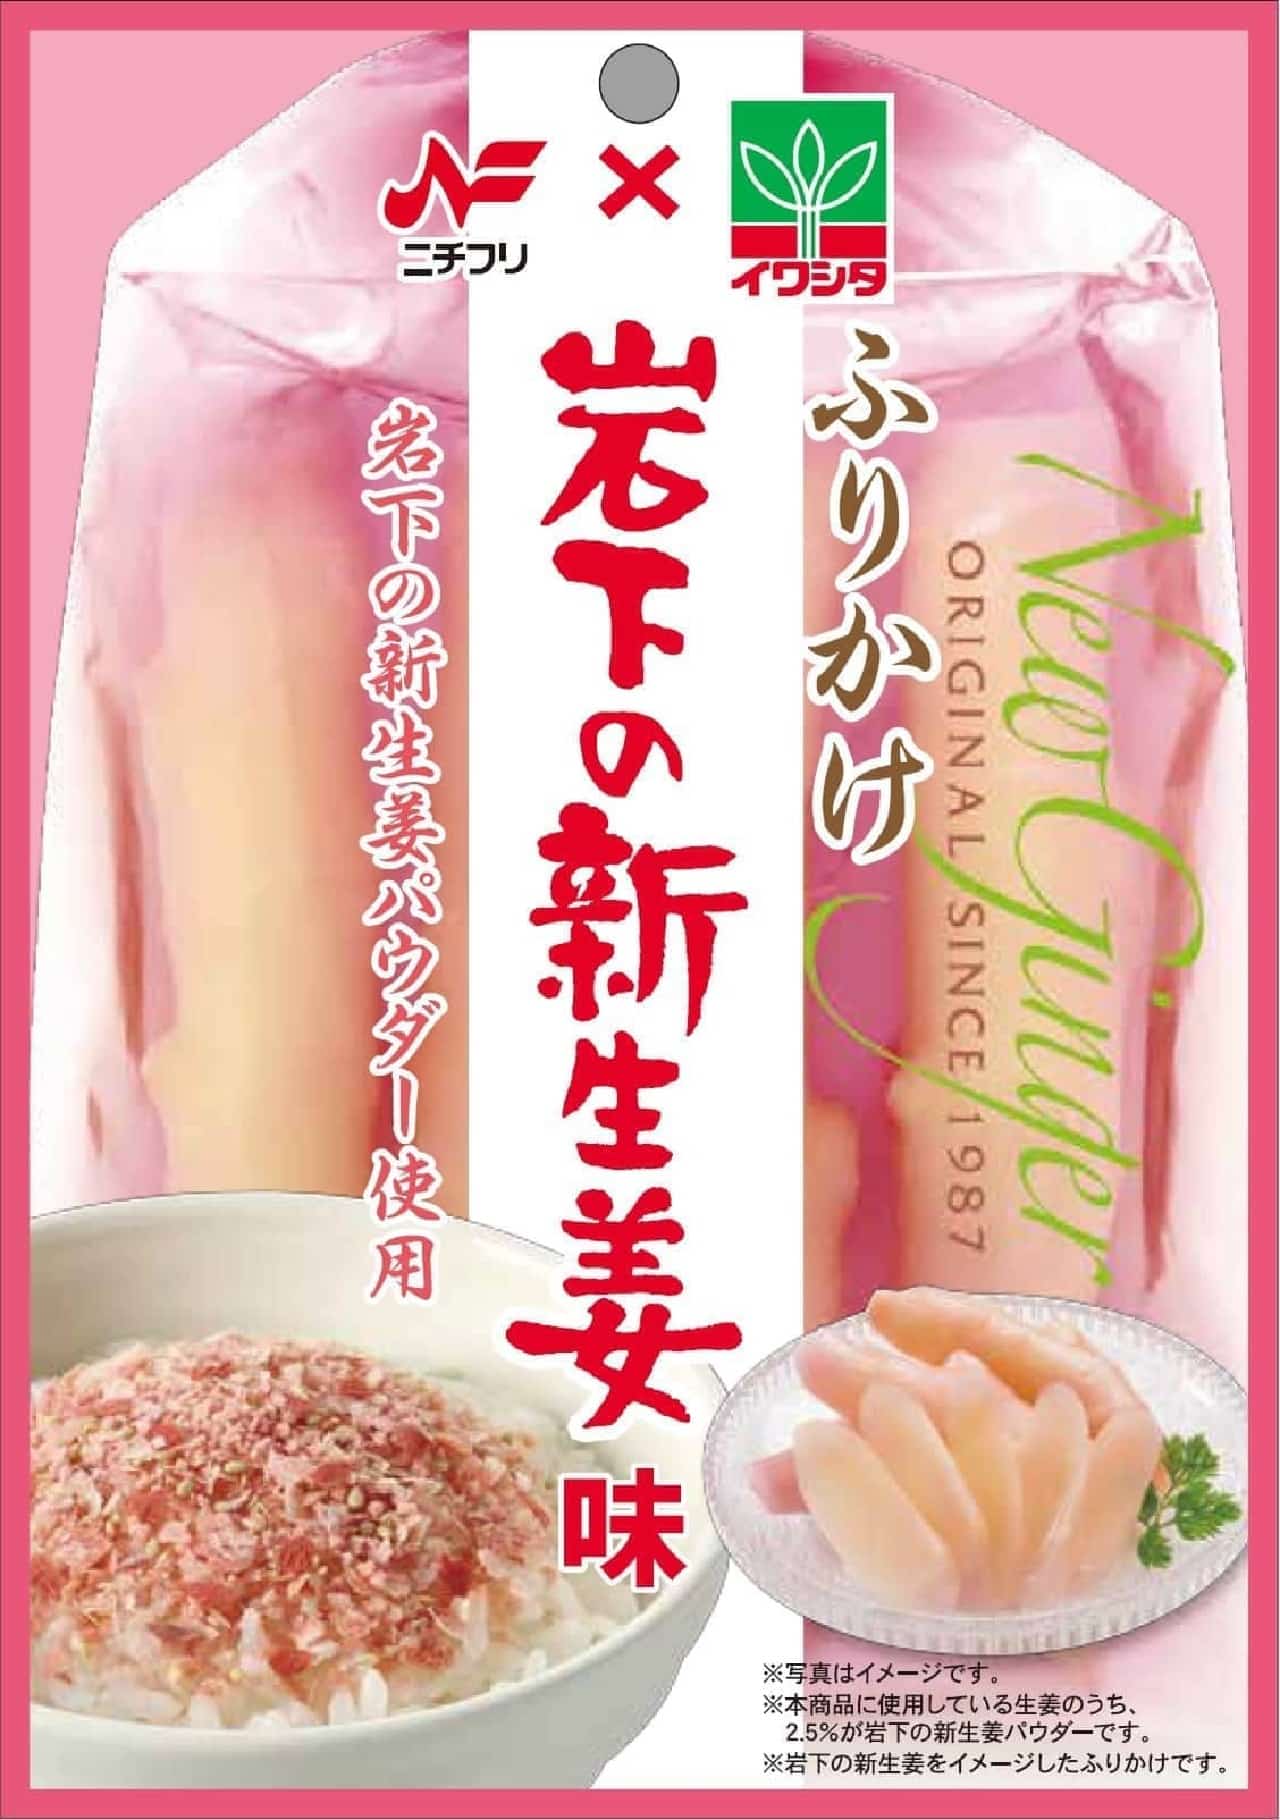 Iwashita's new ginger flavor sprinkle